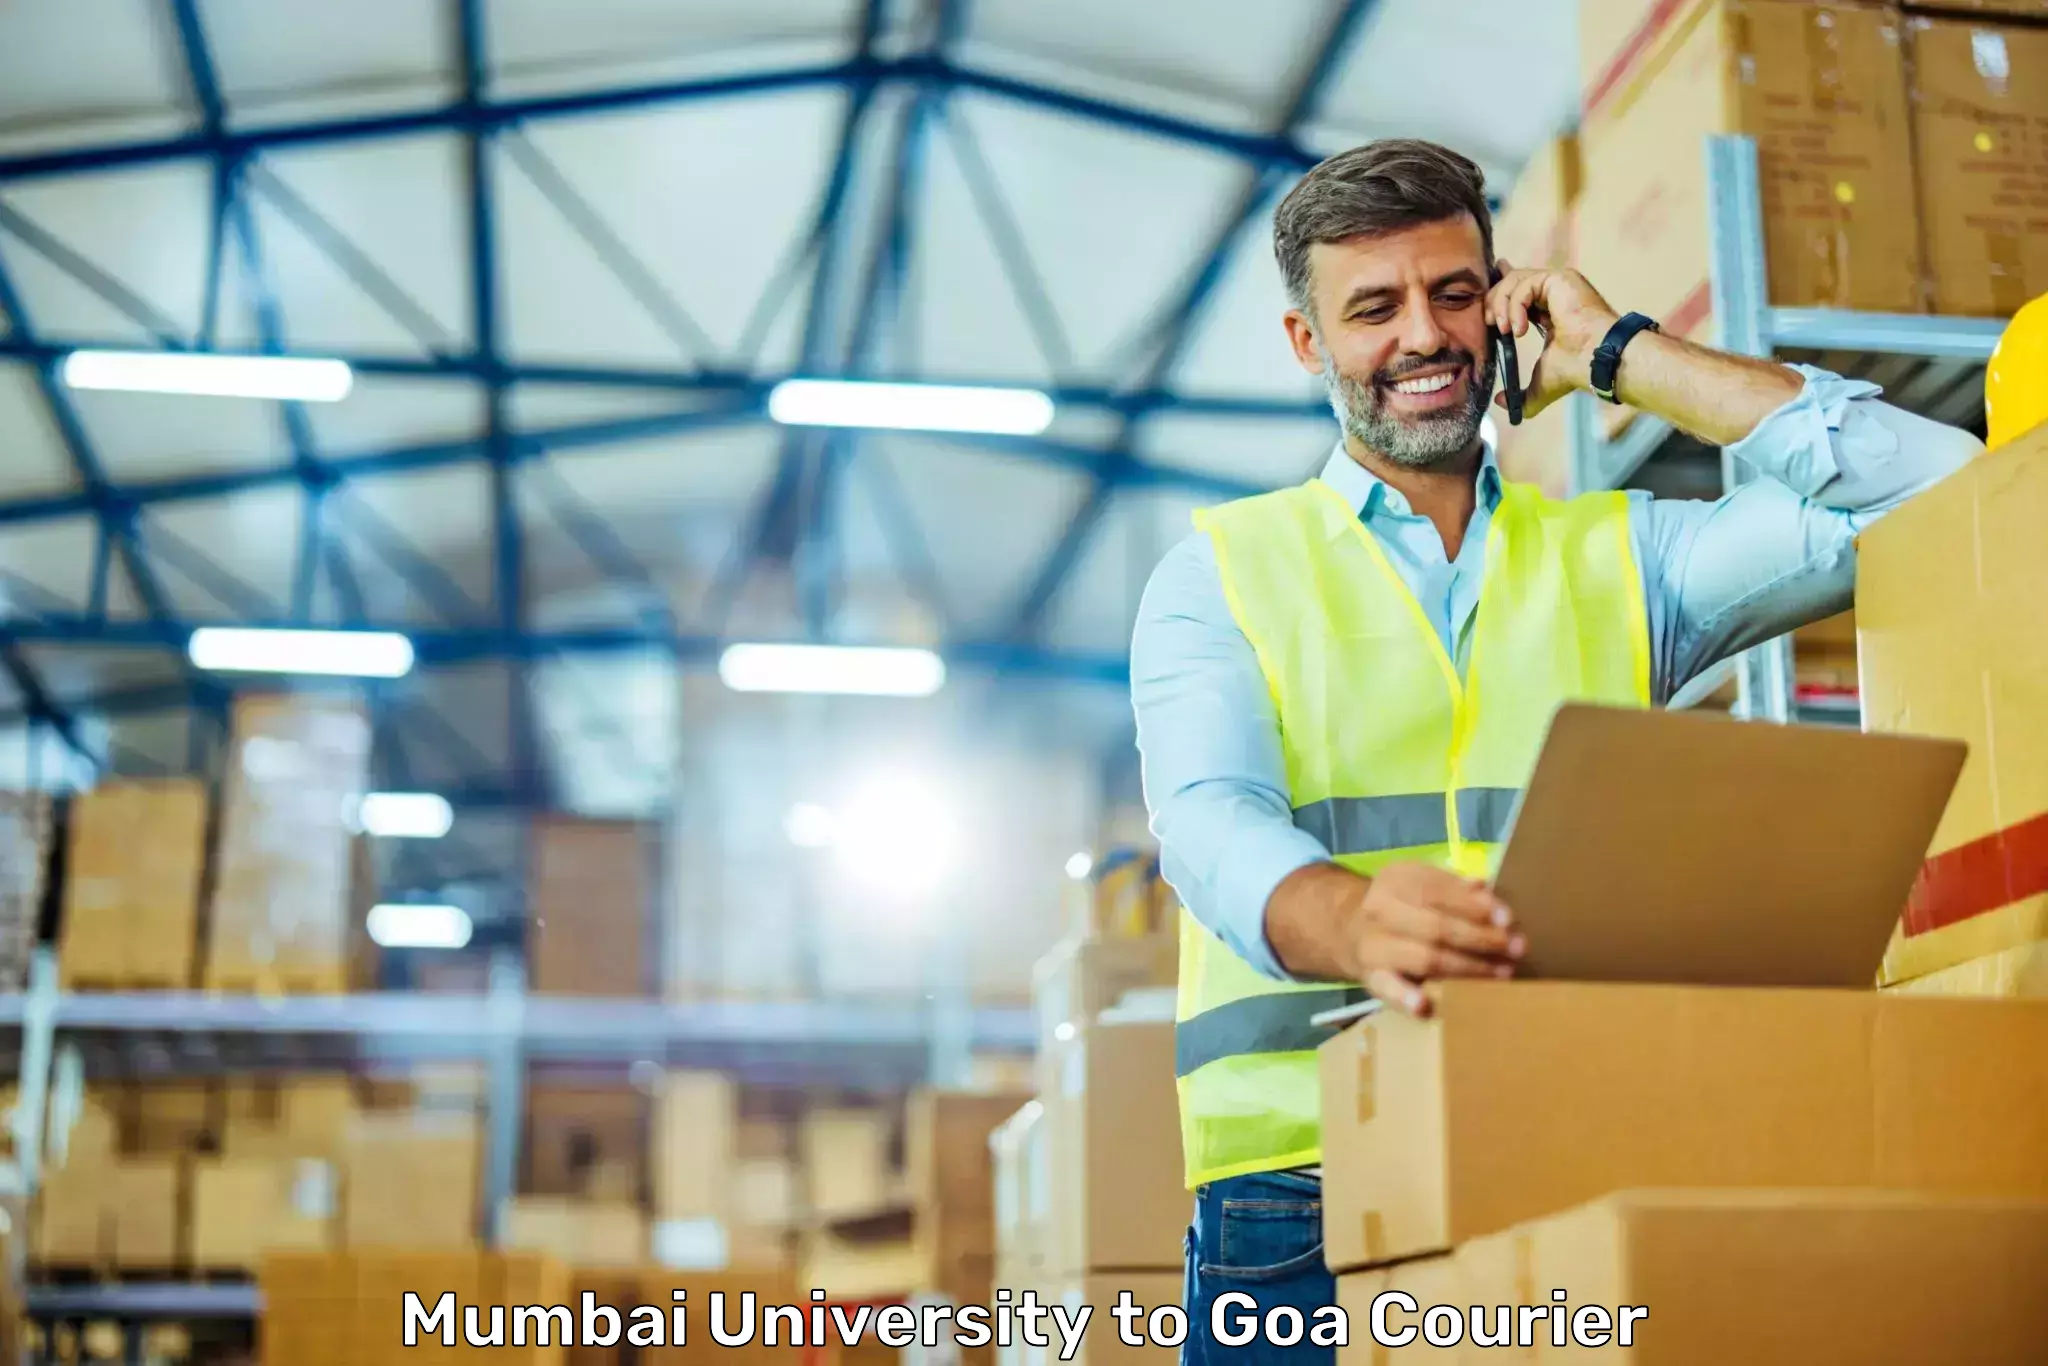 International parcel service Mumbai University to Goa